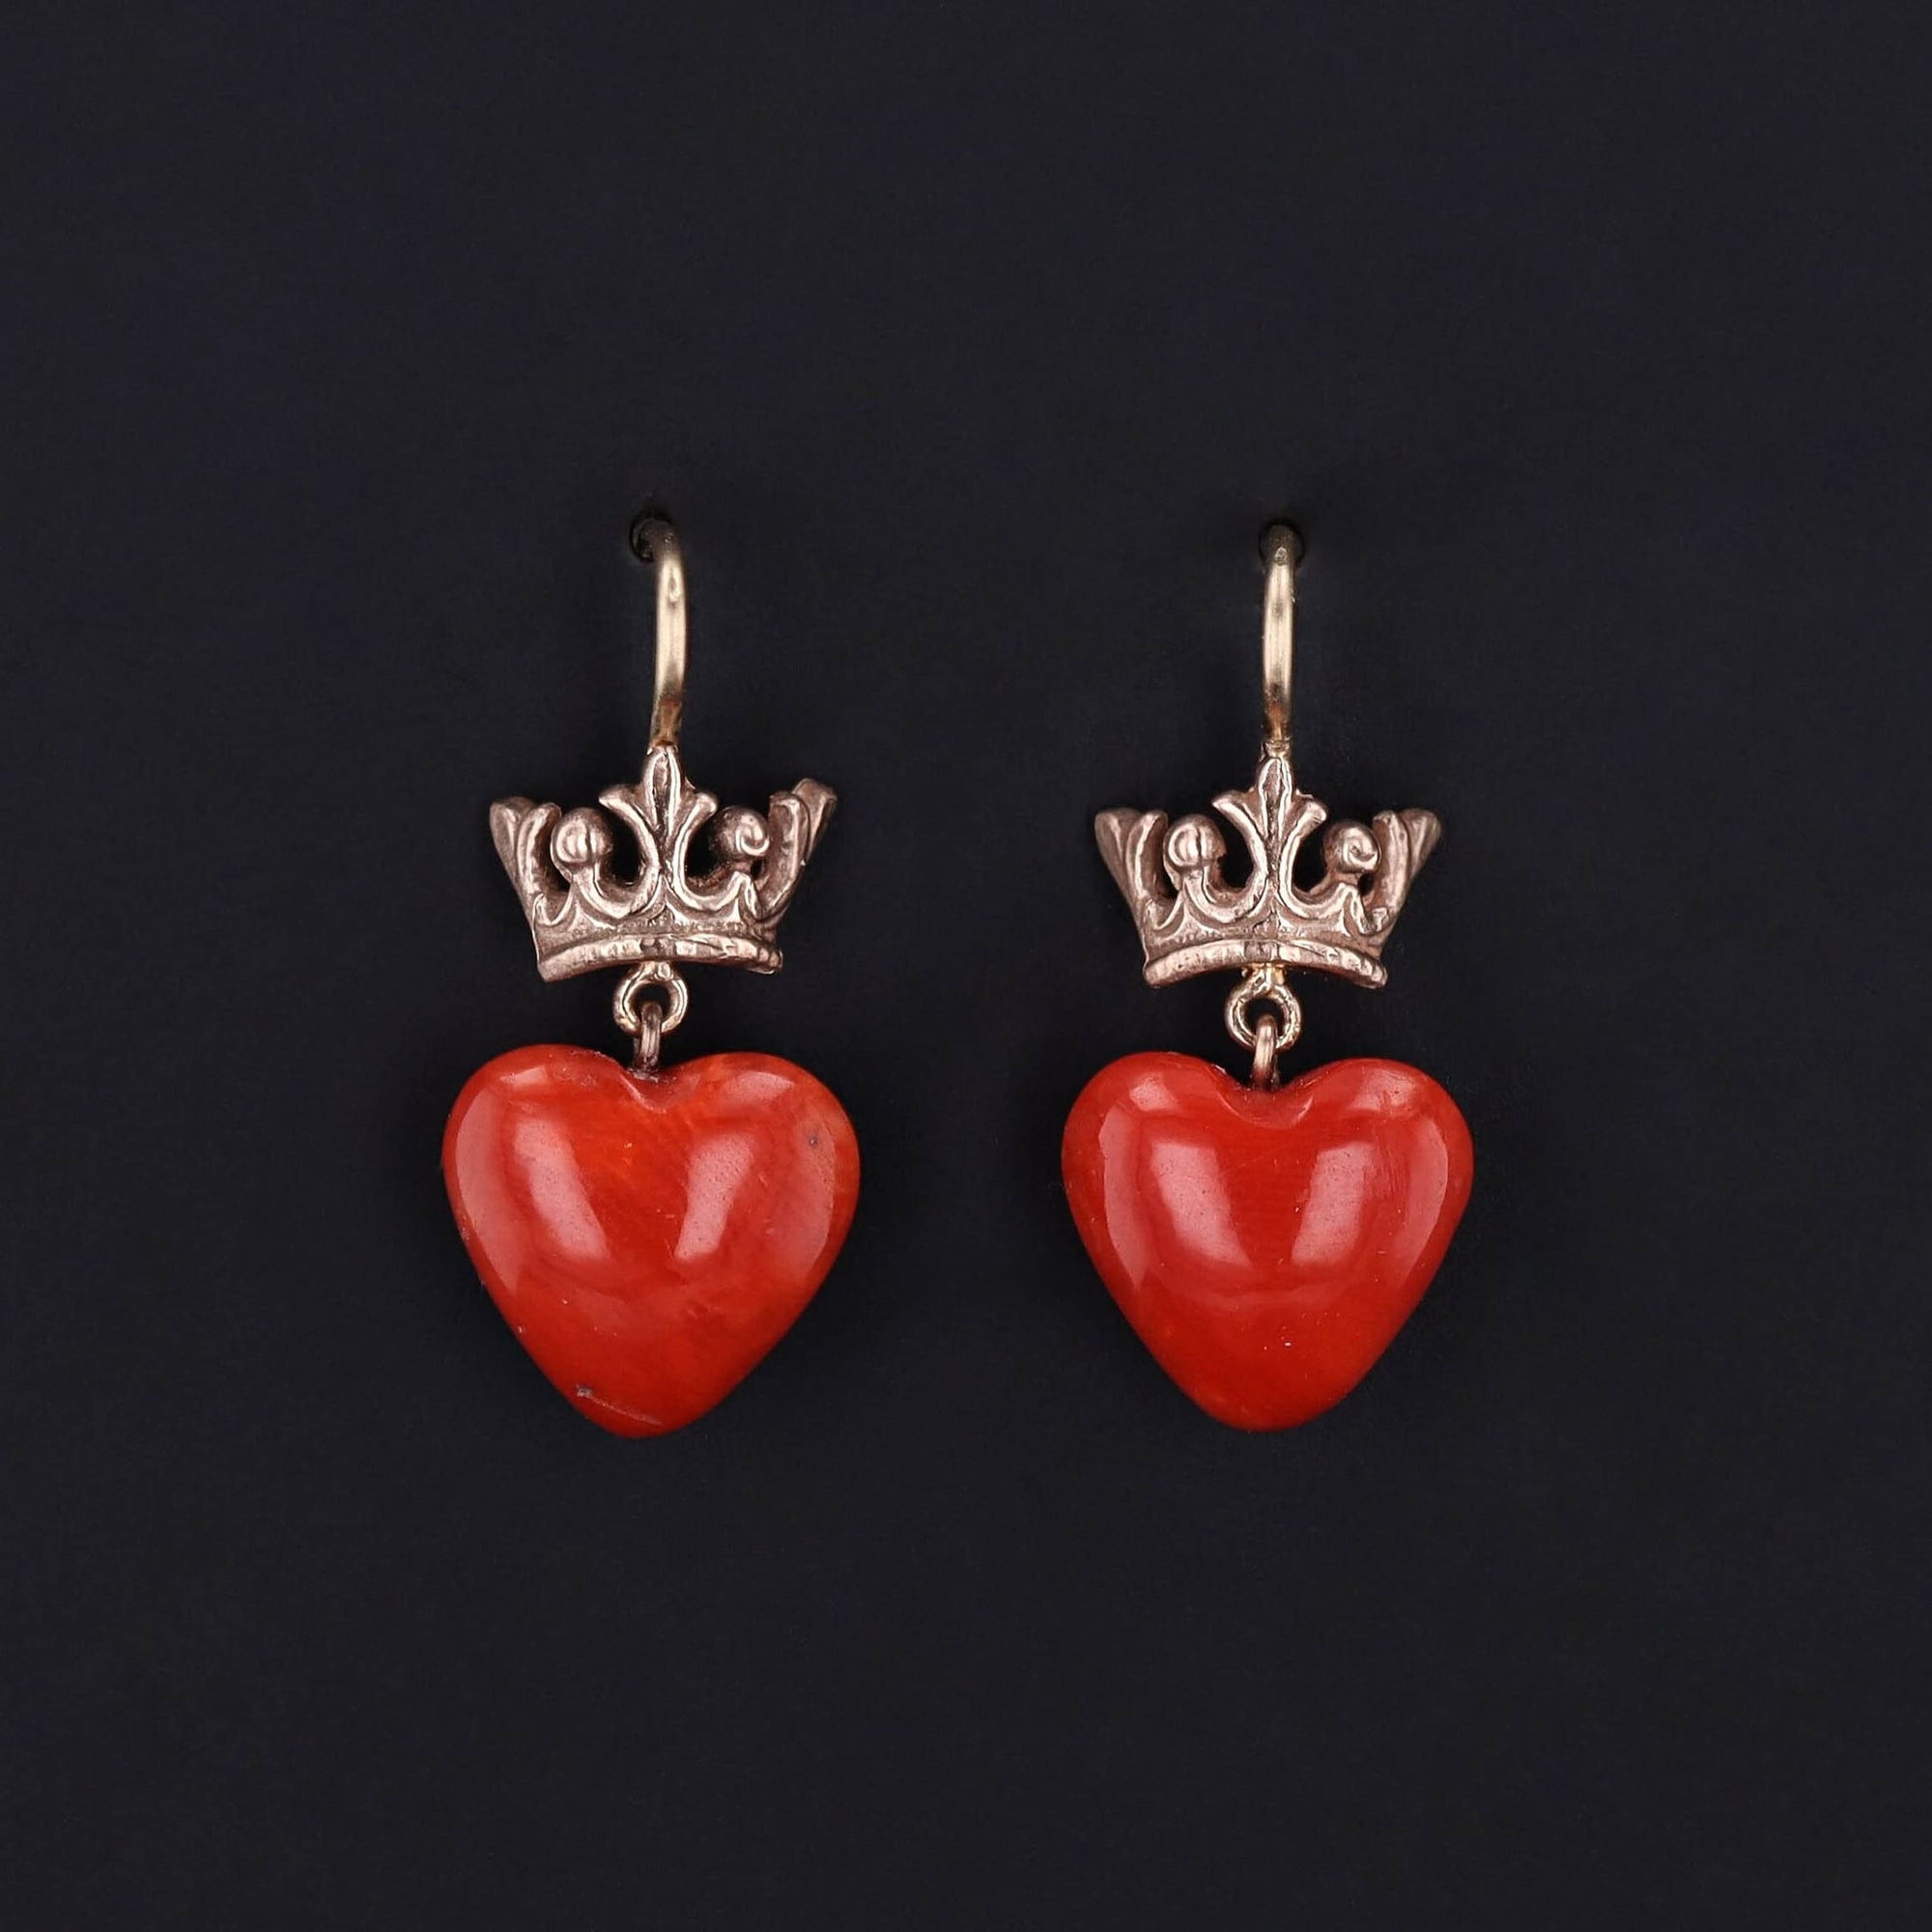 Coral Heart Crown Dangle Earrings of 14k Gold